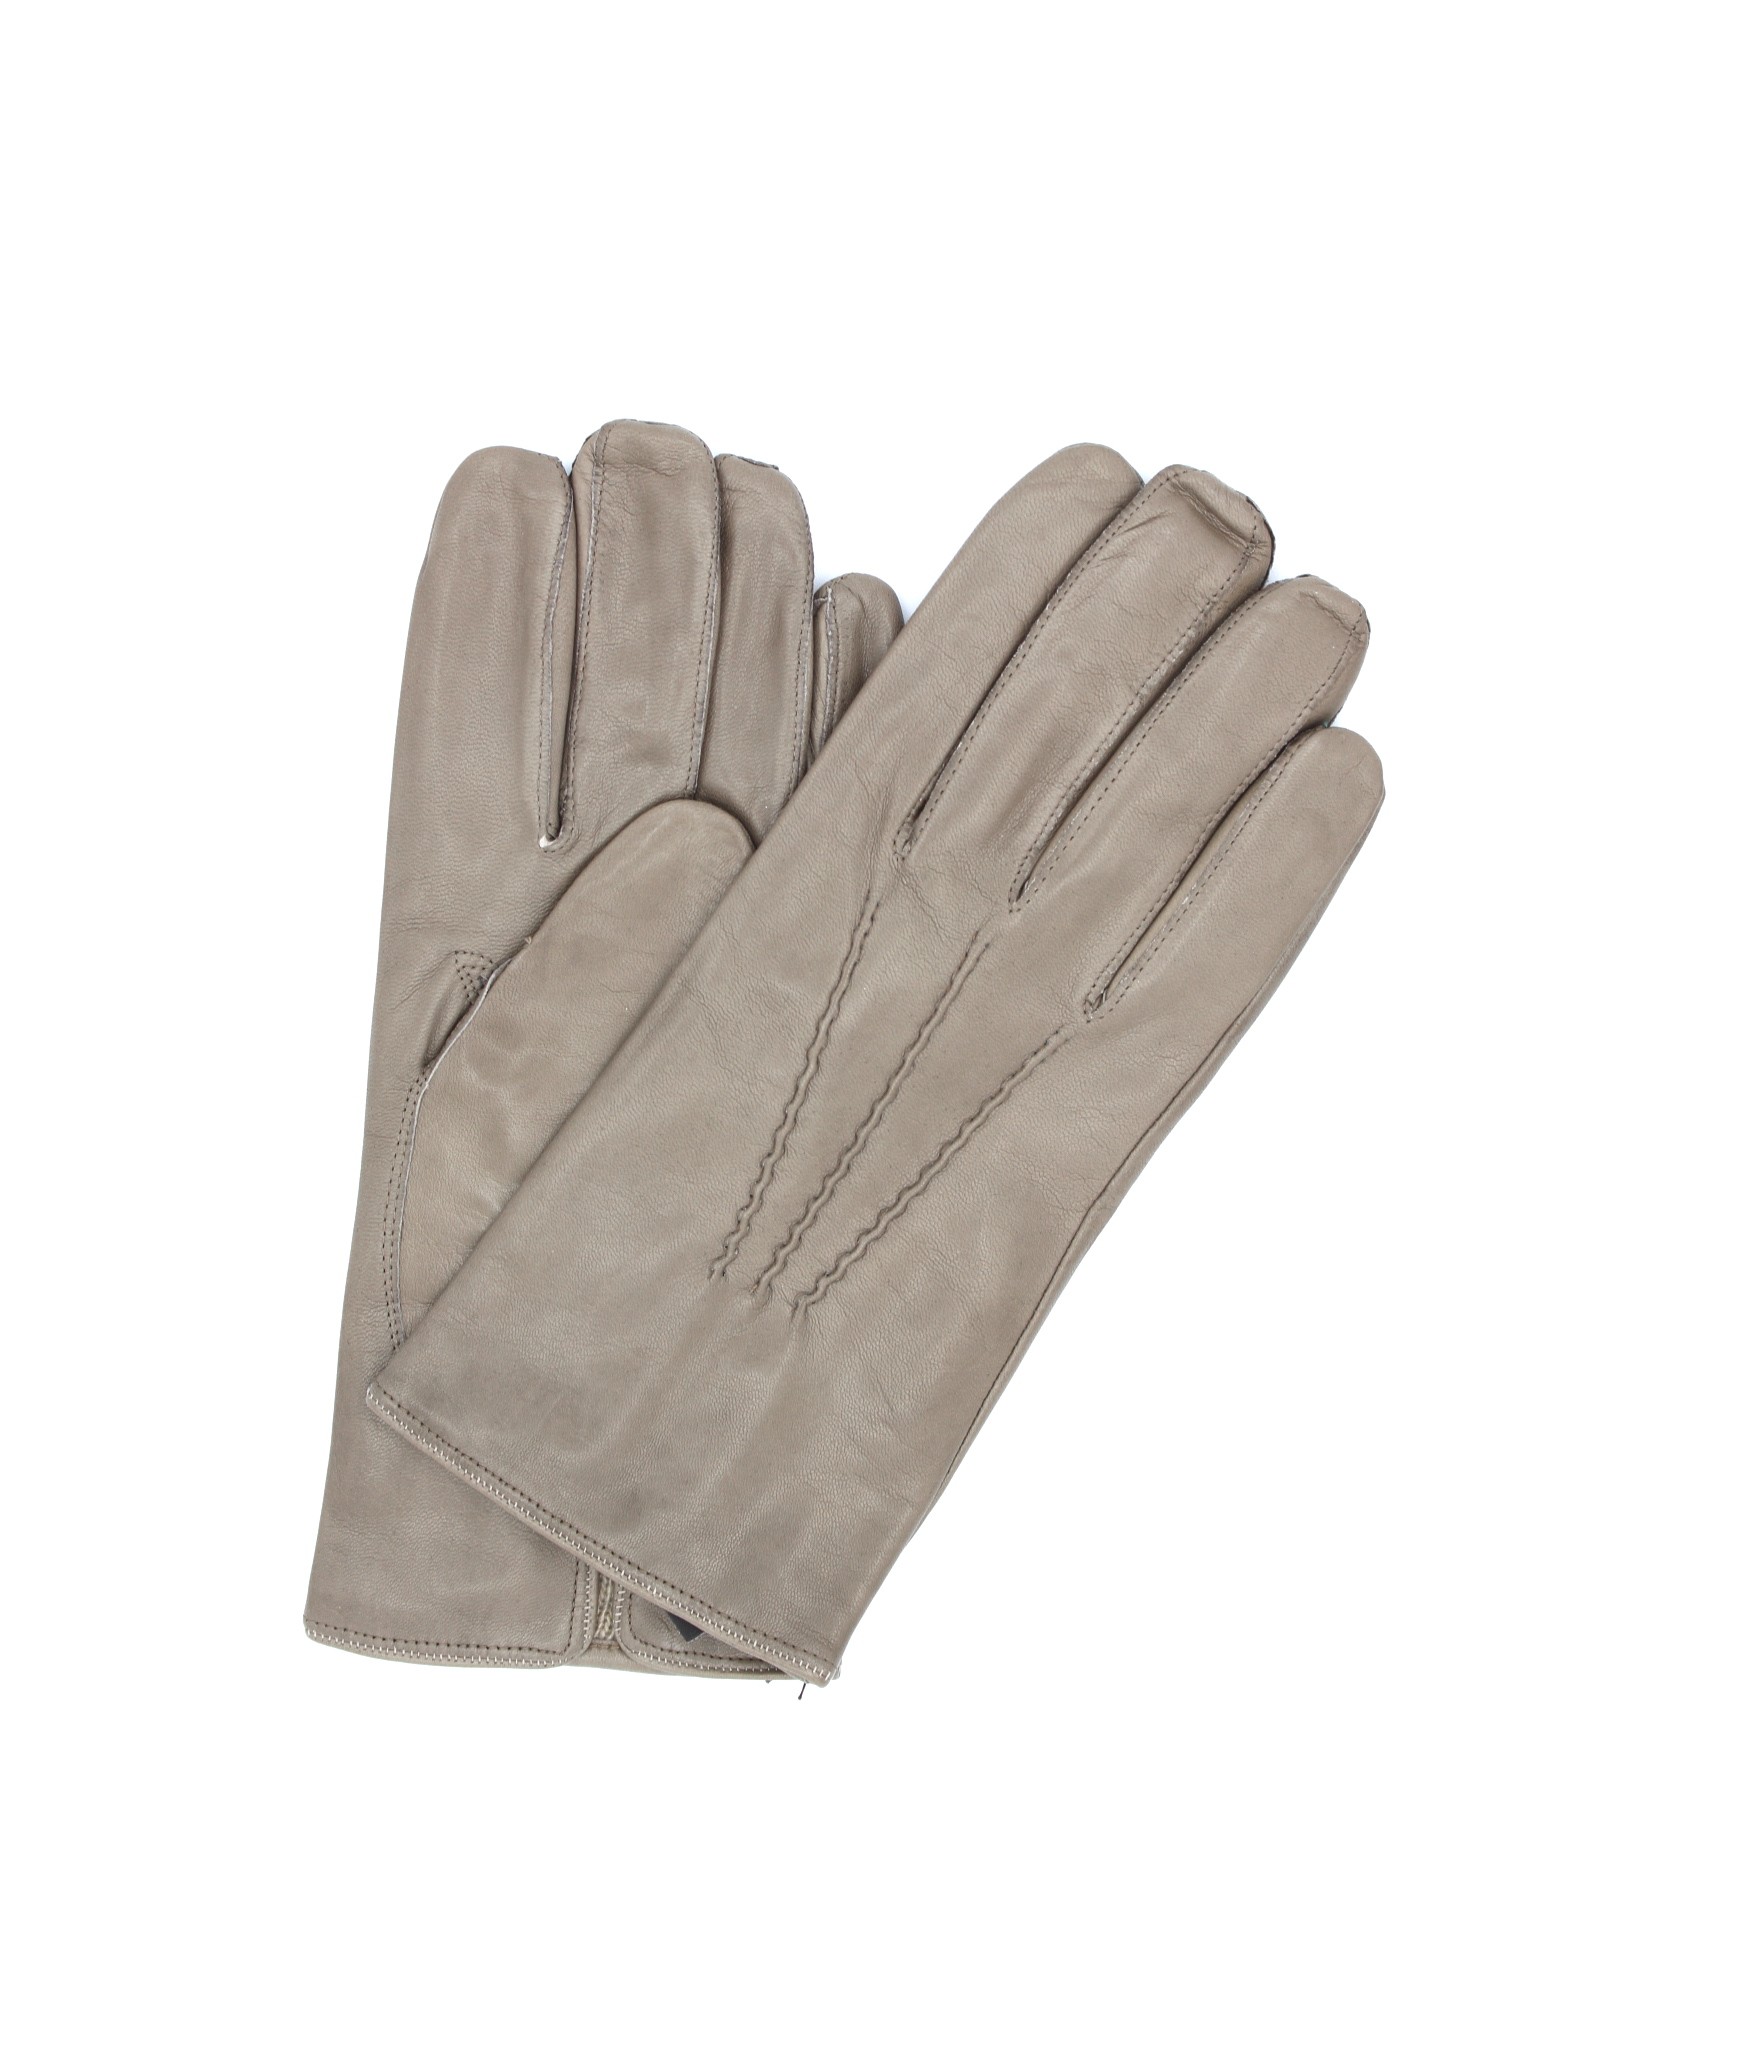 Uomo Classic Nappa leather gloves cashmere lined Mud Sermoneta